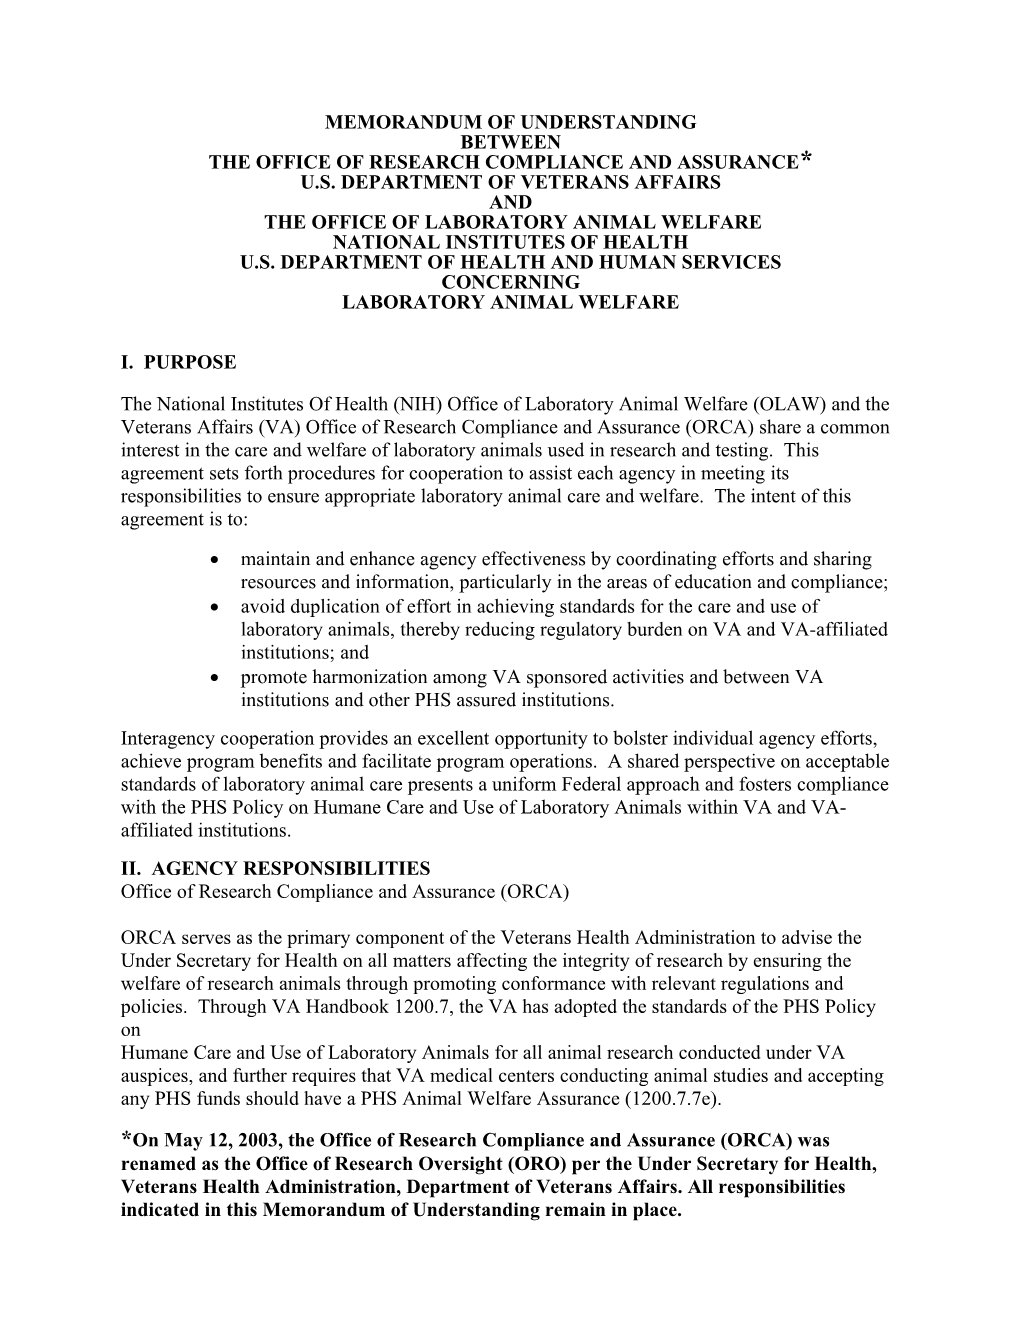 Memorandum of Understanding Between the Office of Research Compliance and Assurance* U.S